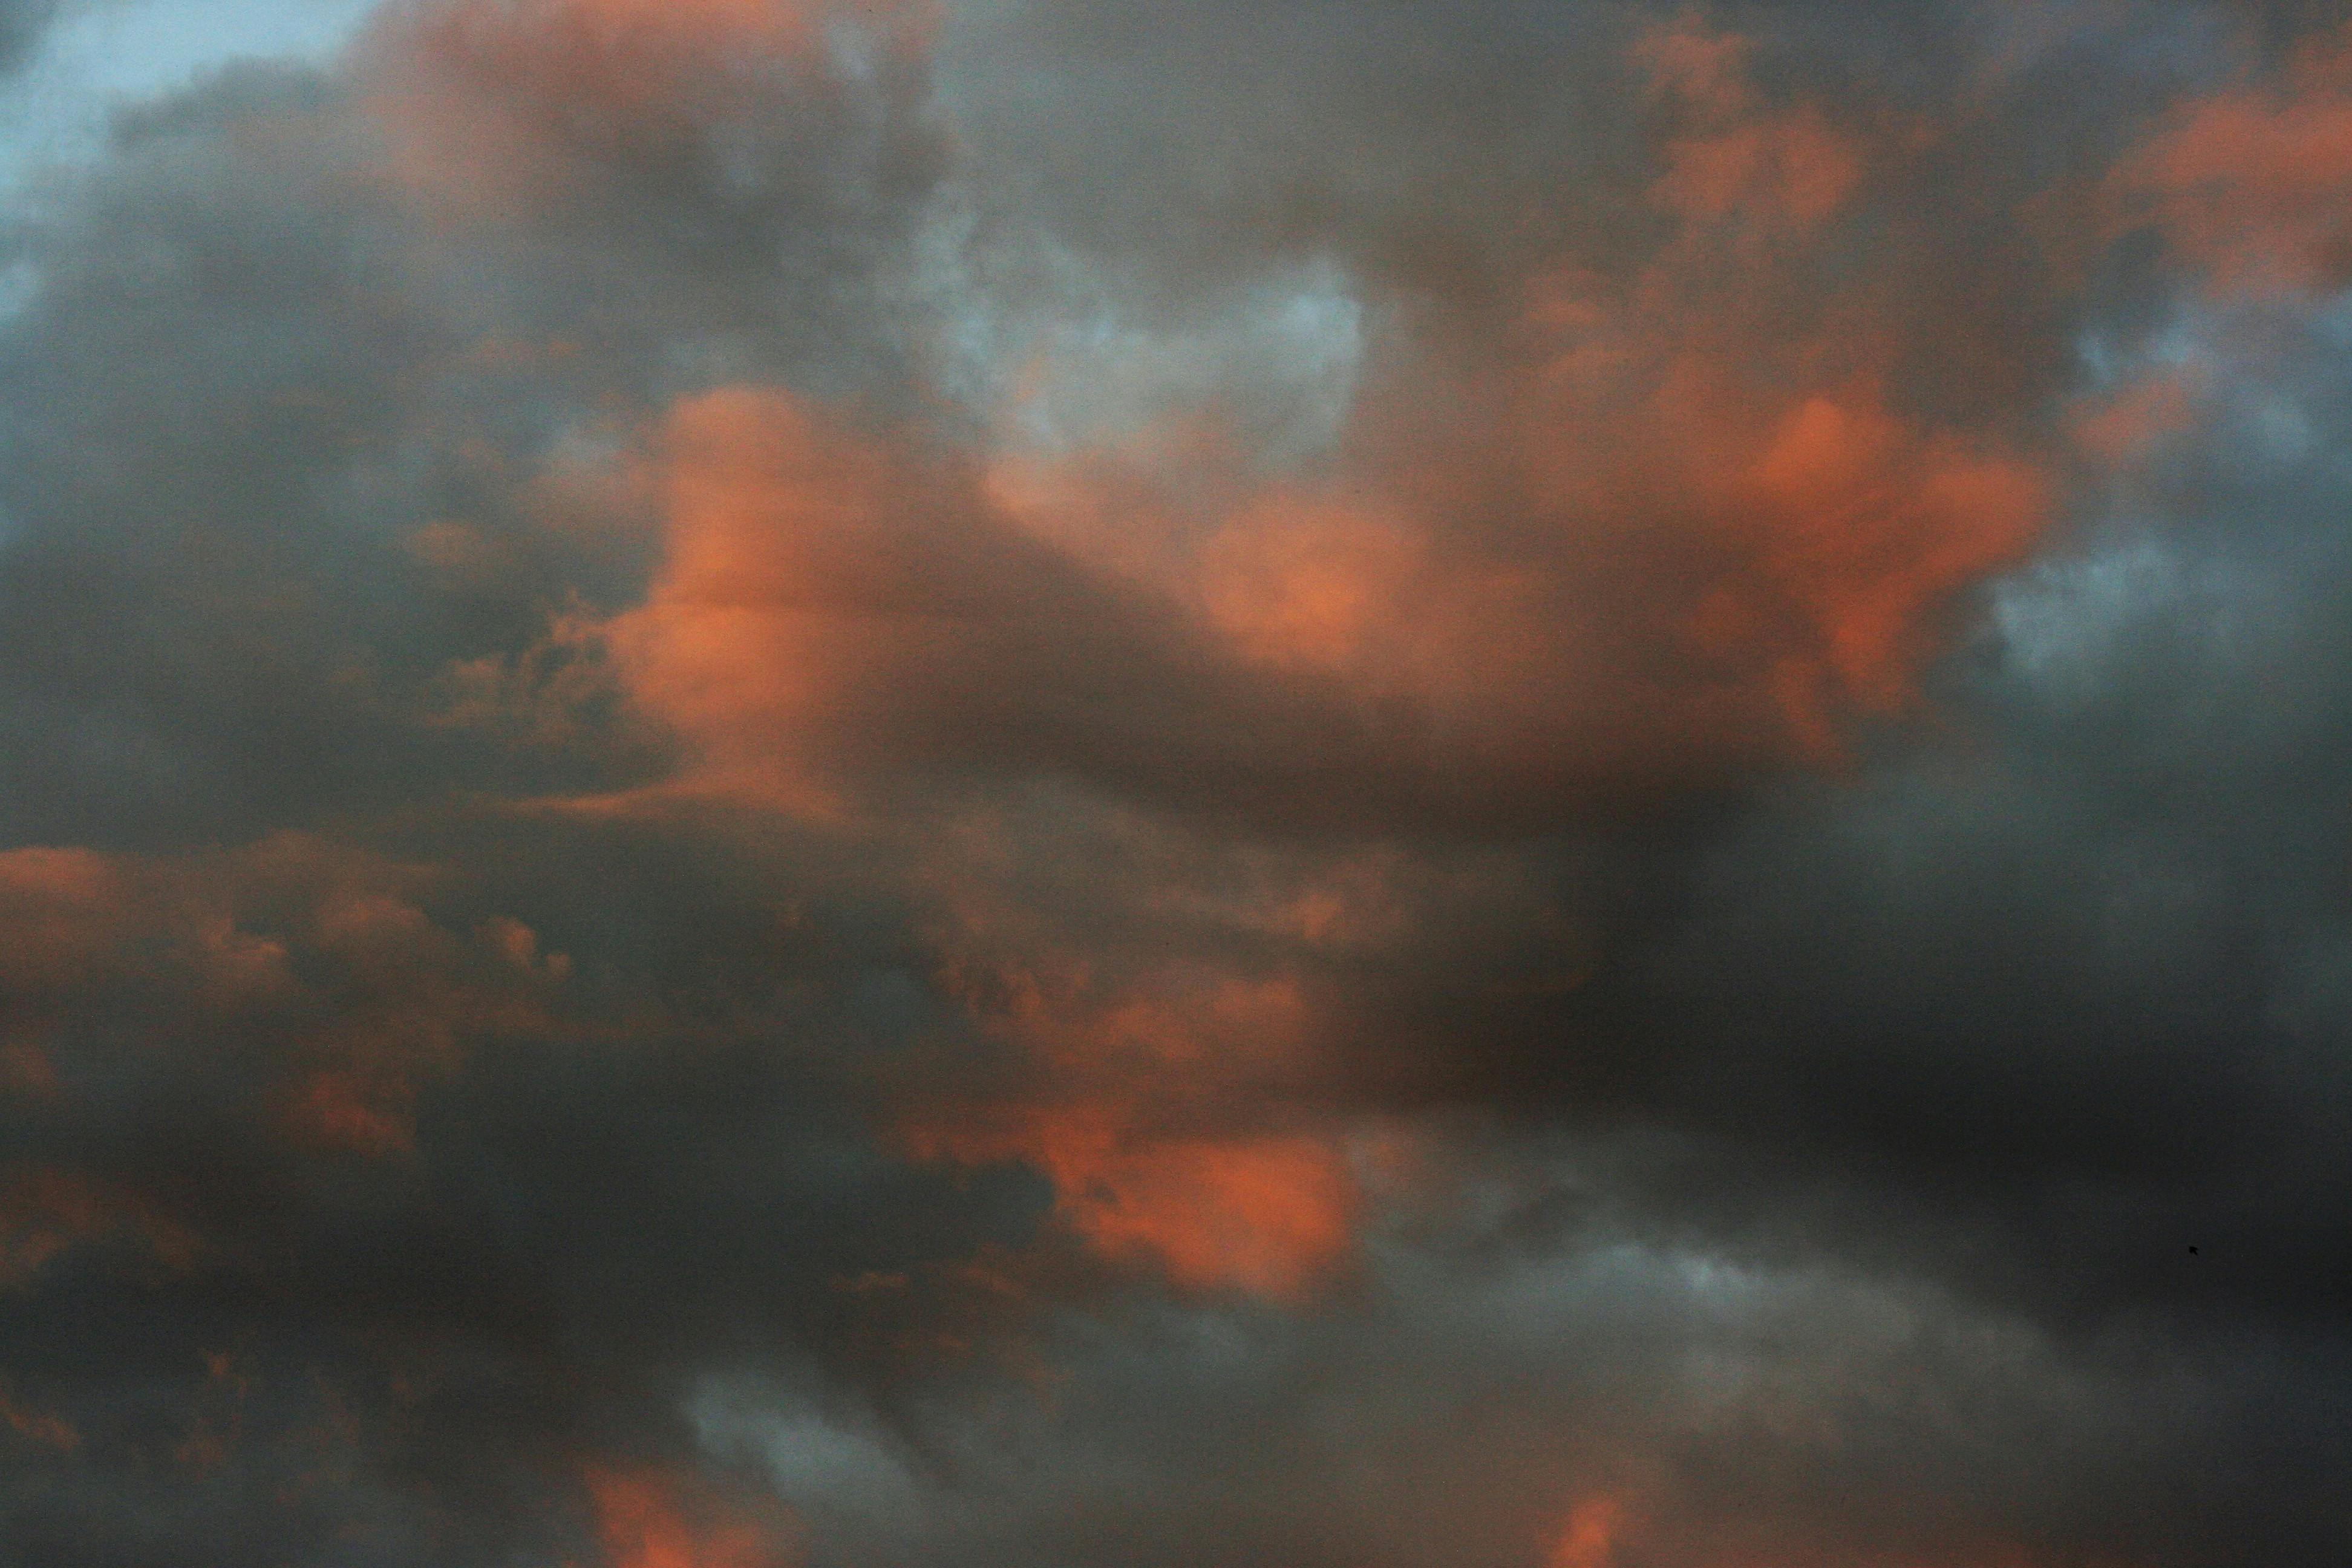 Free stock photo of evening sky